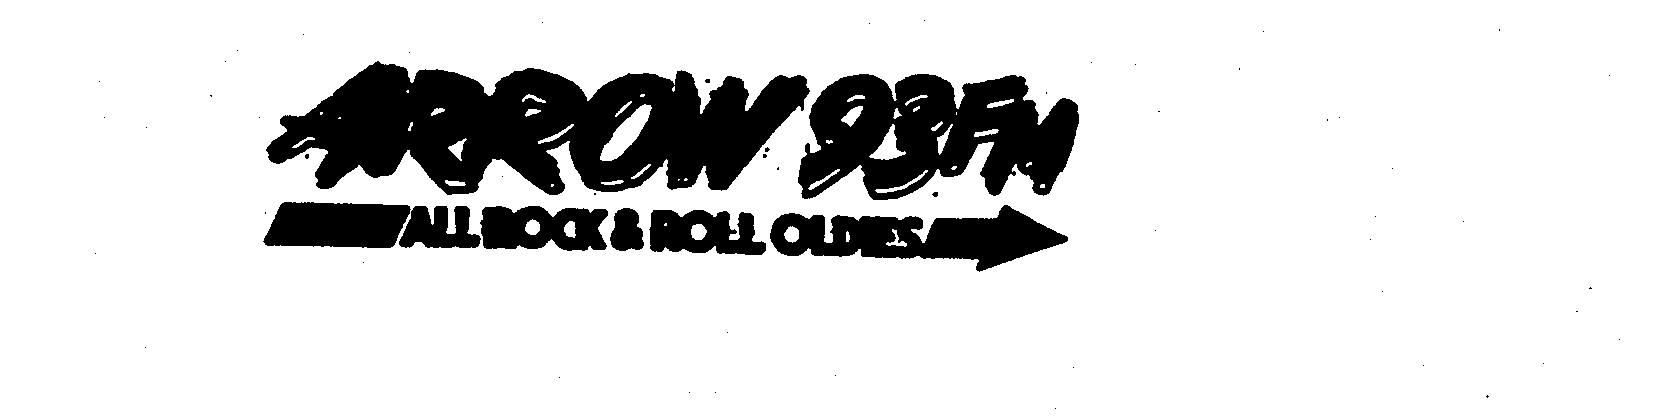  ARROW 93 FM ALL ROCK &amp; ROLL OLDIES